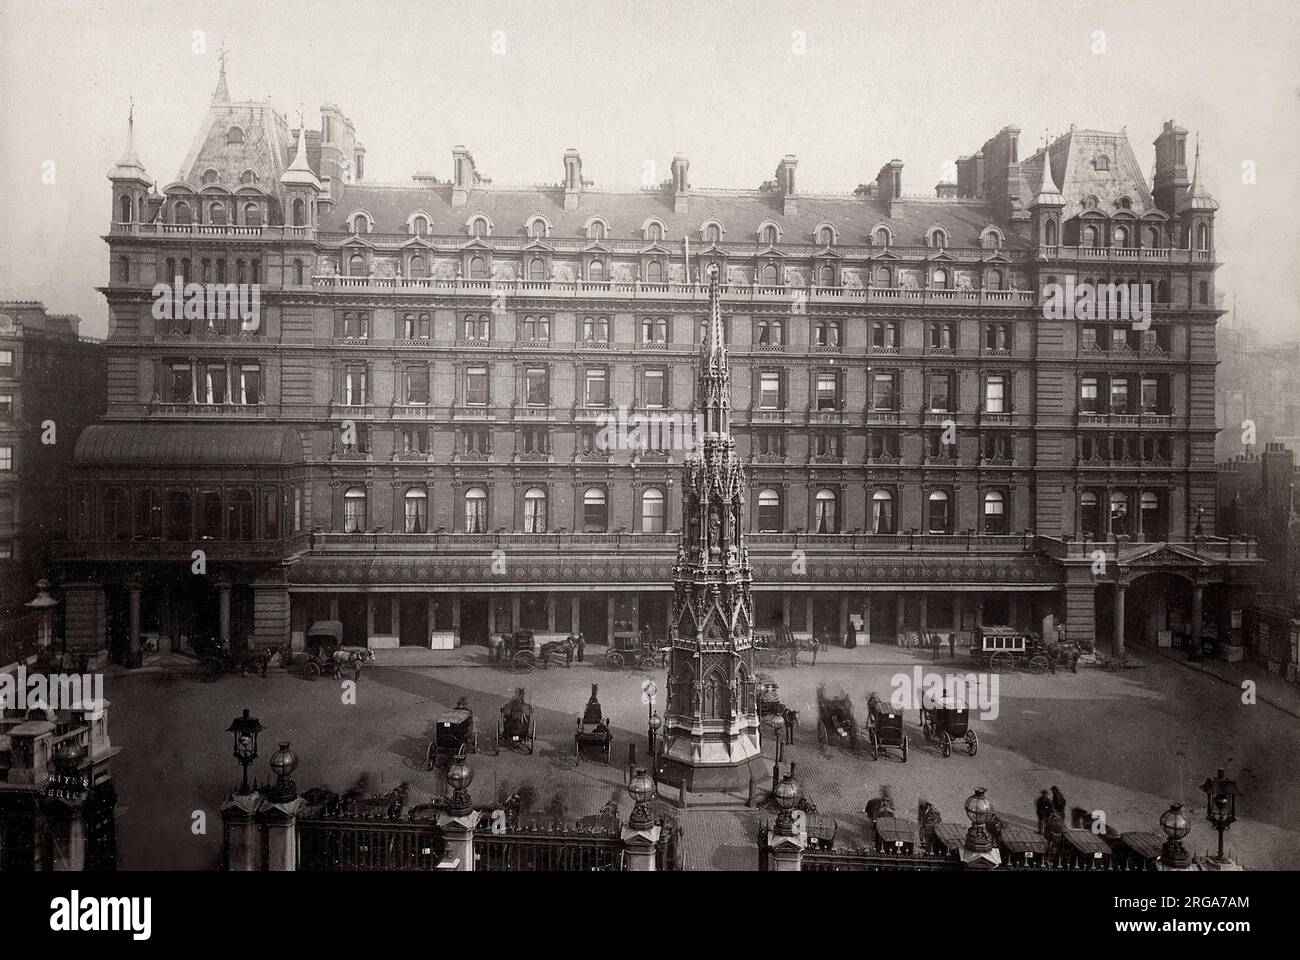 Photographie vintage du 19th siècle: Charing Cross Railway station Hotel, Londres Banque D'Images